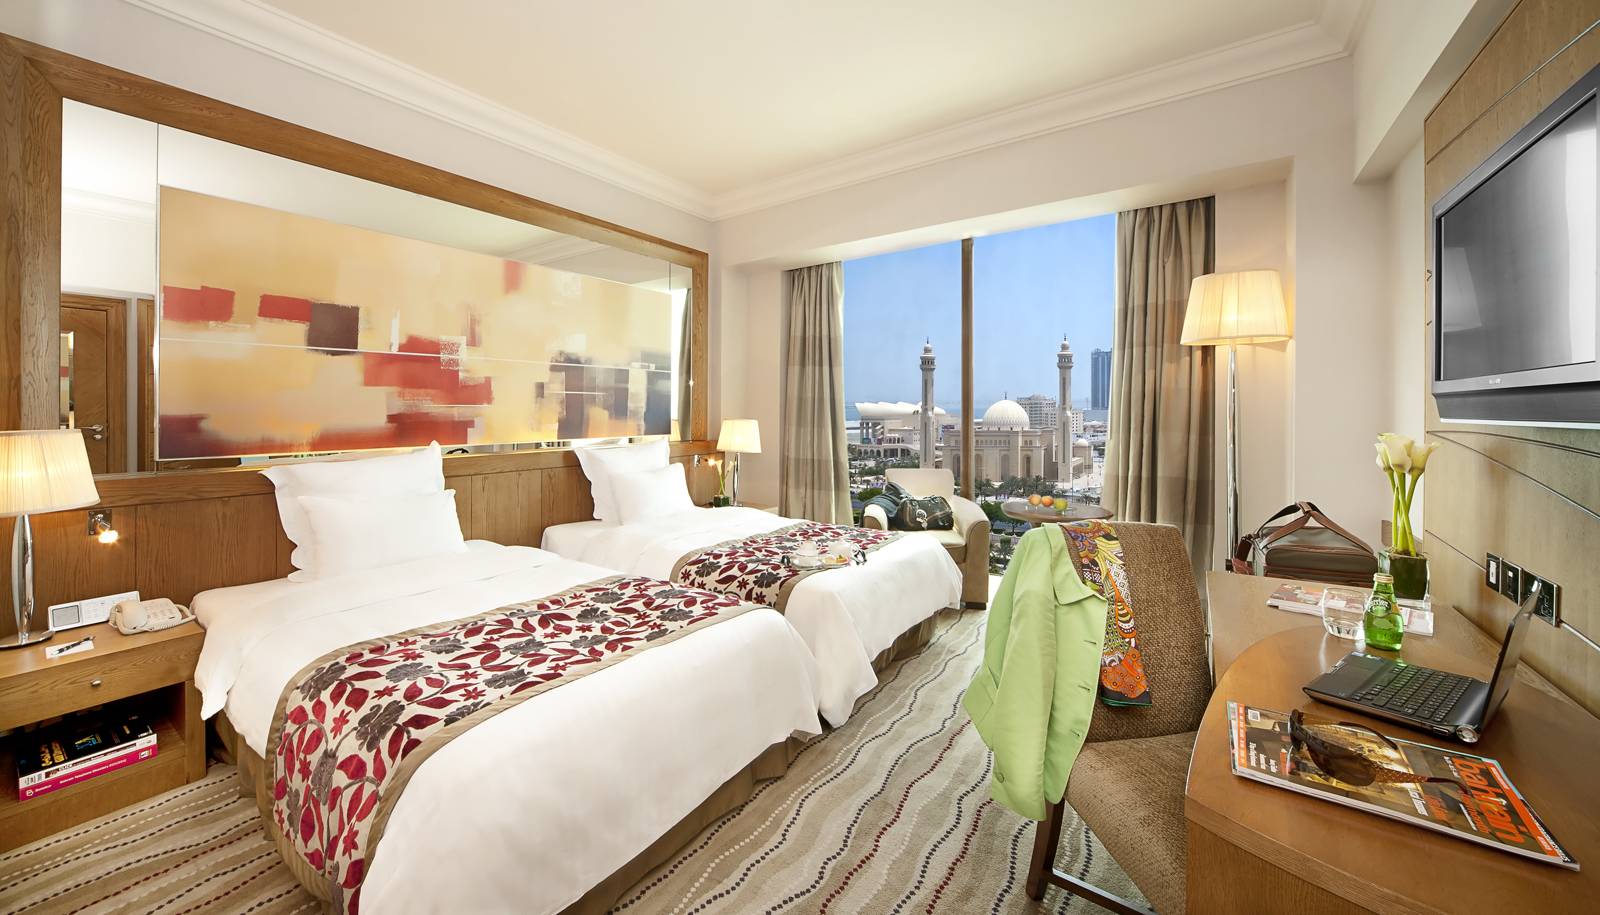 Hotel Rooms to Inspire Your Bedroom Design